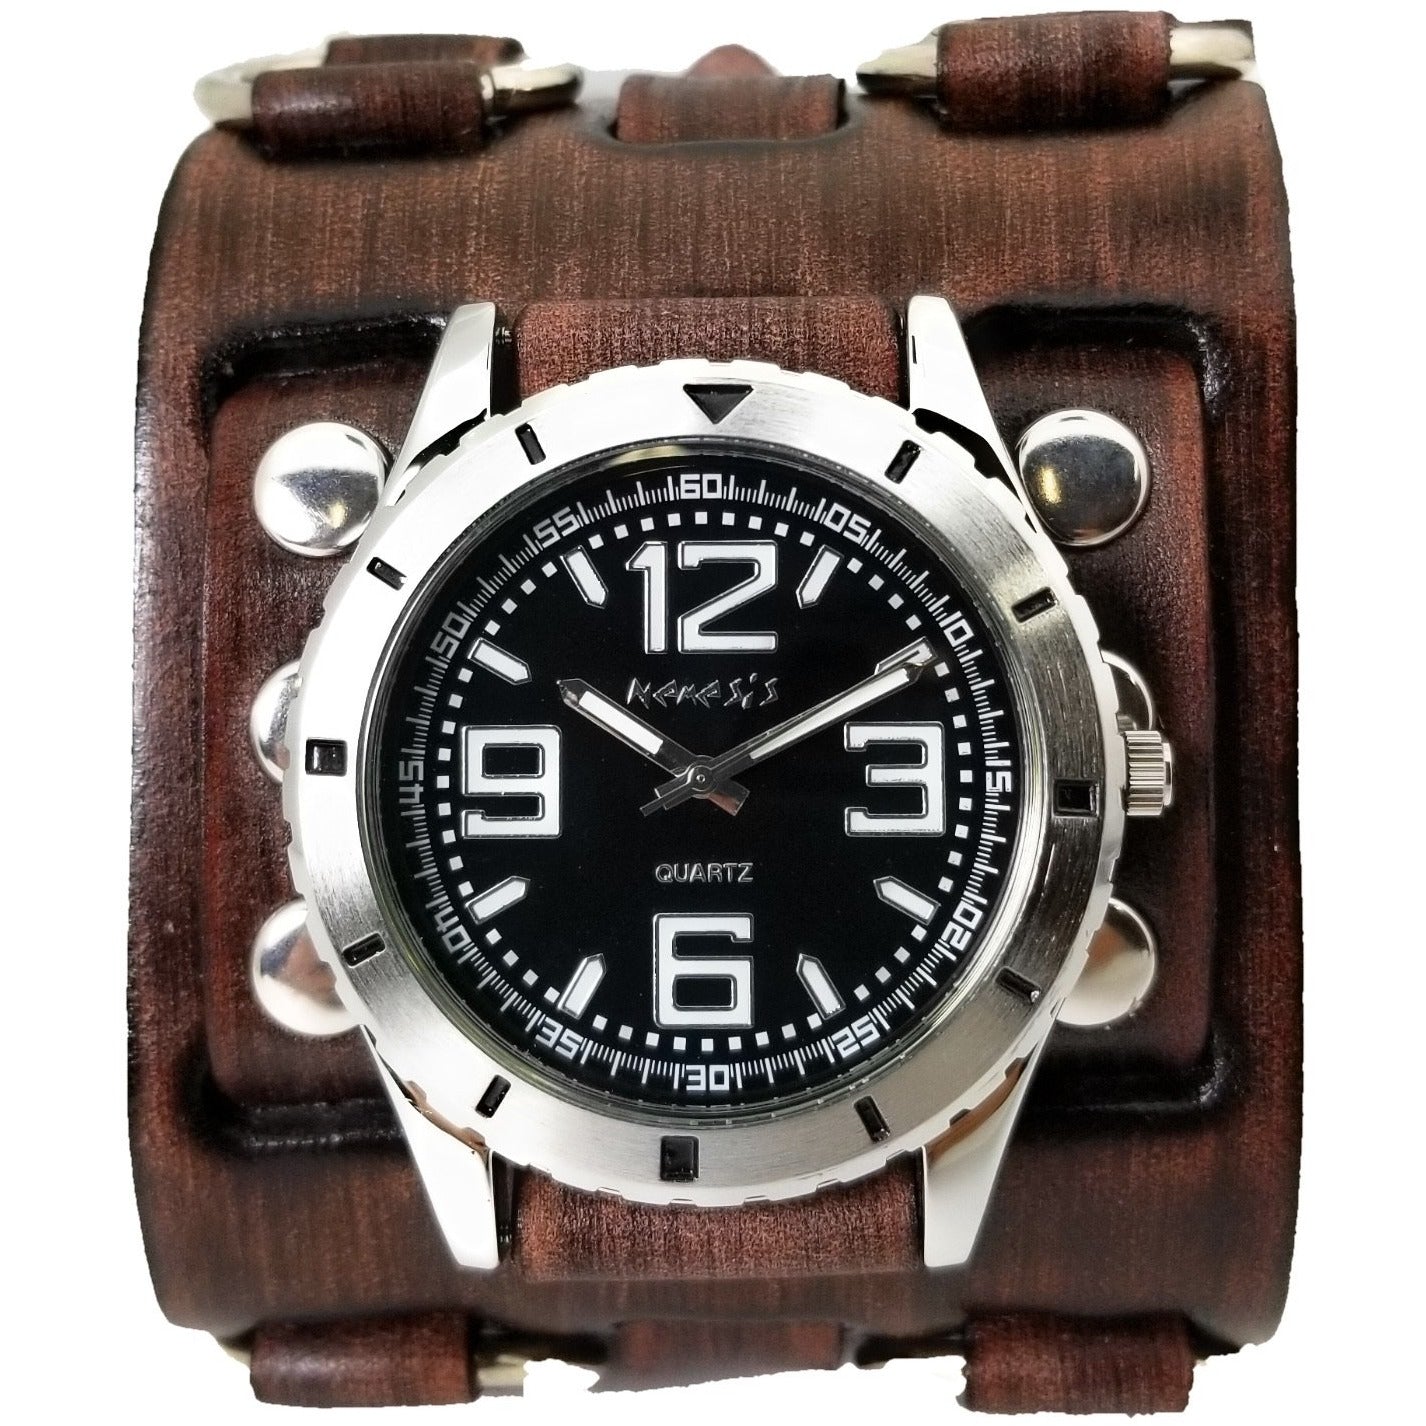 Groovy Black Watch with Ring Distressed Dark Brown Leather Triple Strap Cuff  BFWB096K